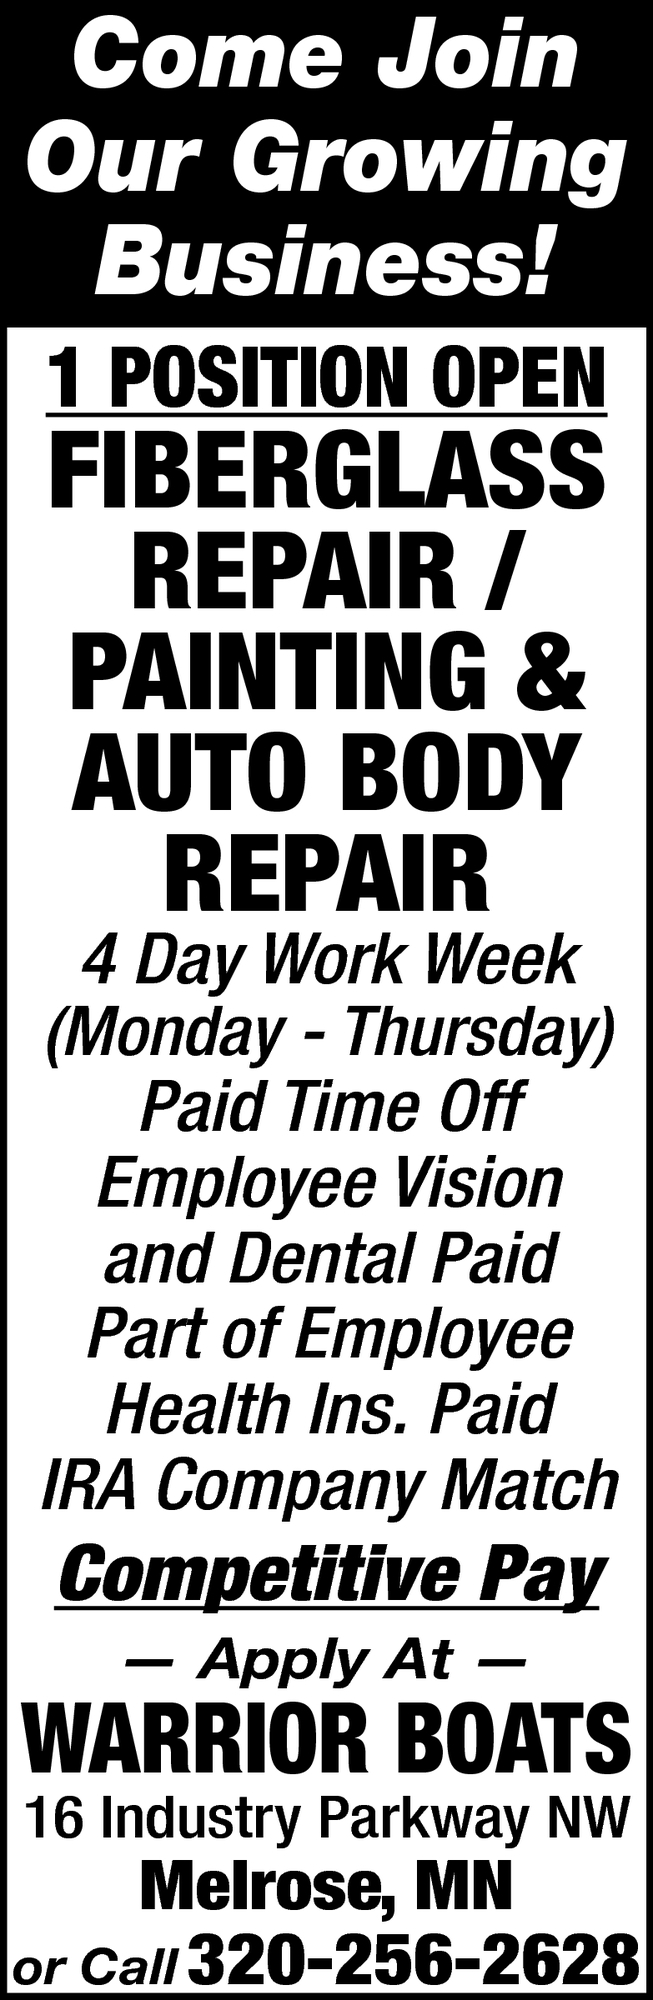 Fiberglass Repair/ Painting & Auto Body Repair